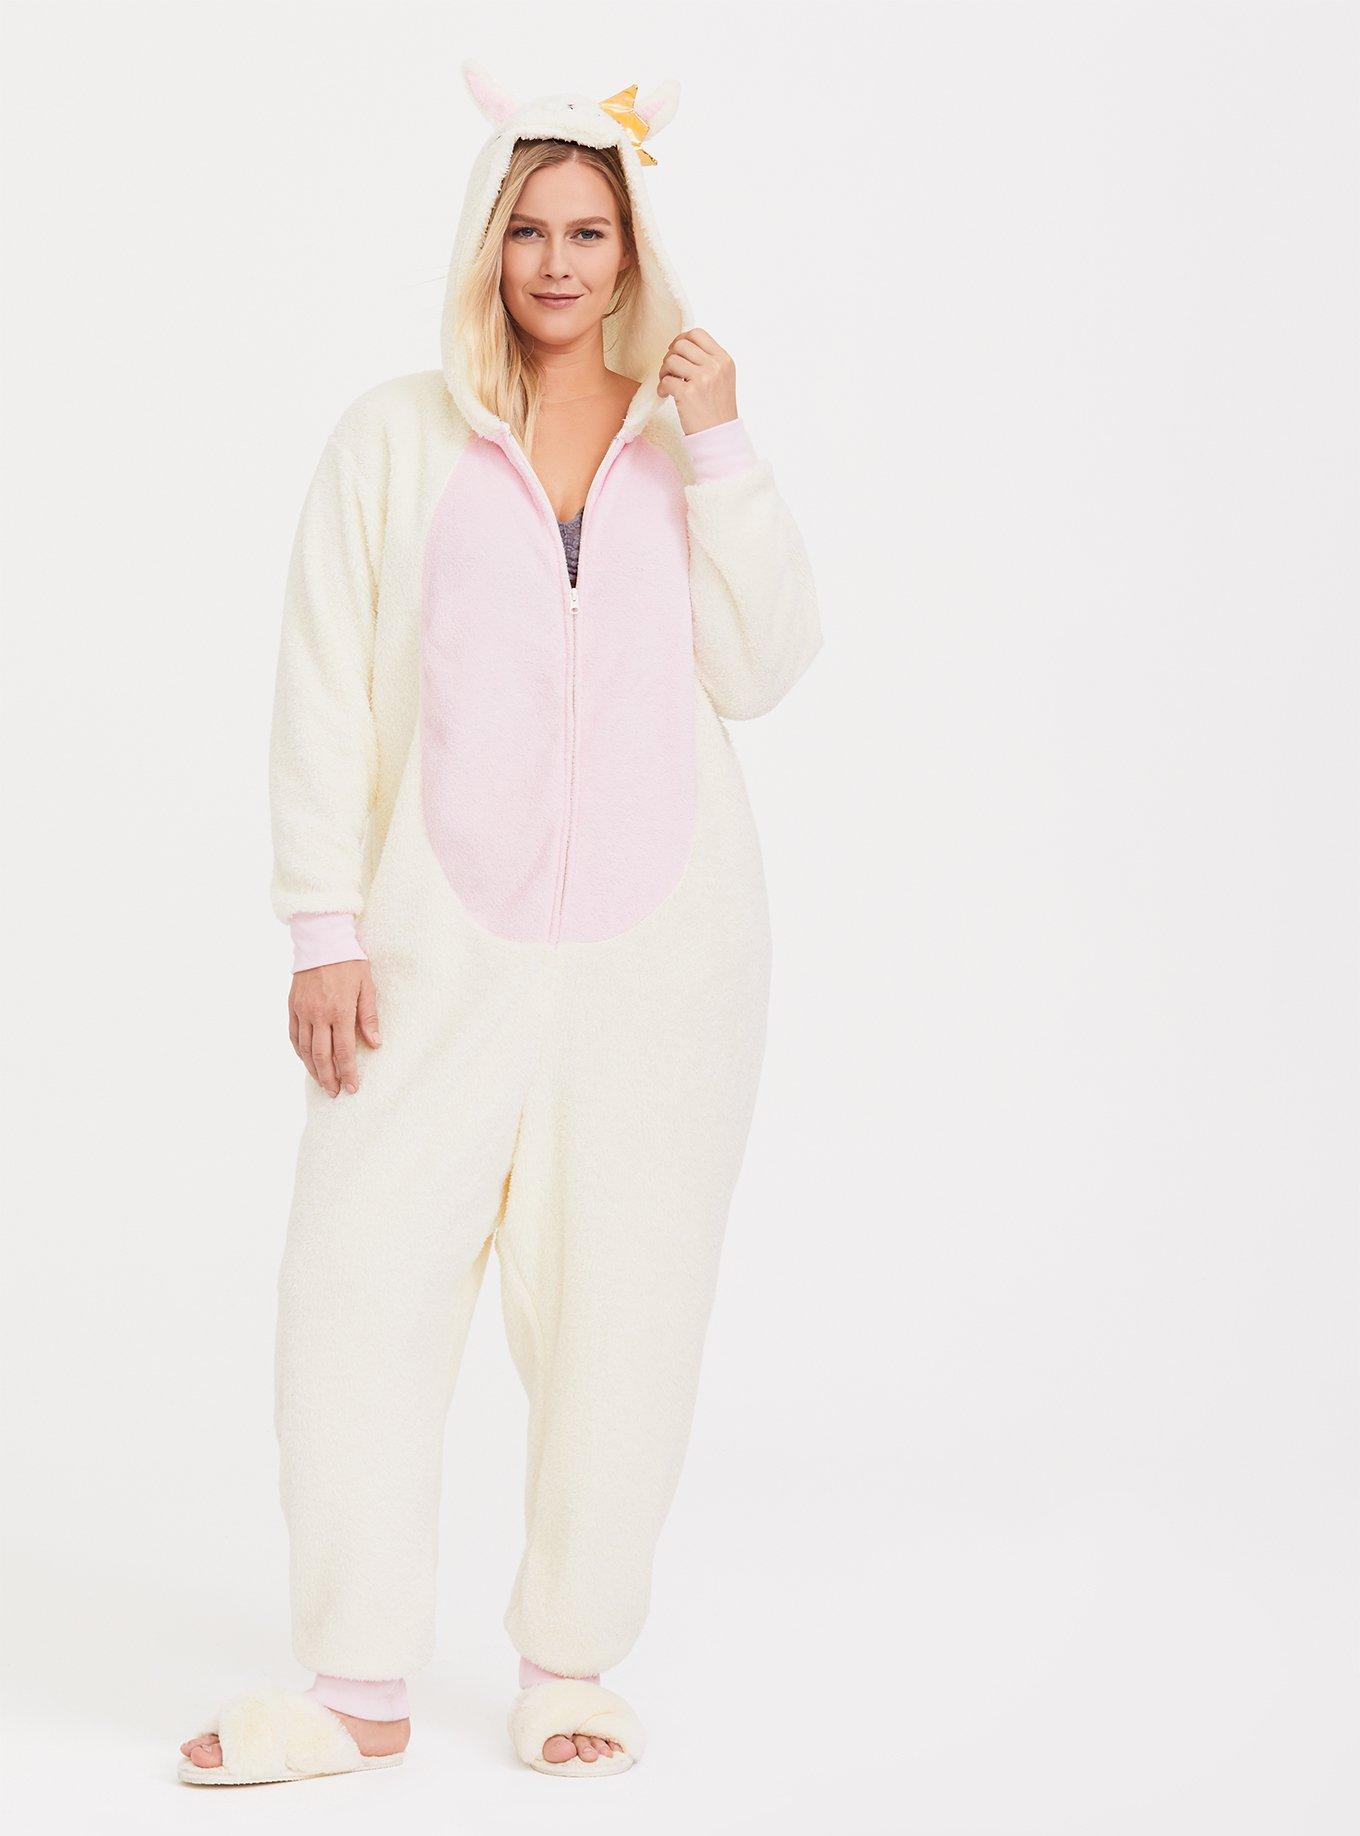 Plus Size - Cream & Pink Llama Fleece Sleep Onesie - Torrid